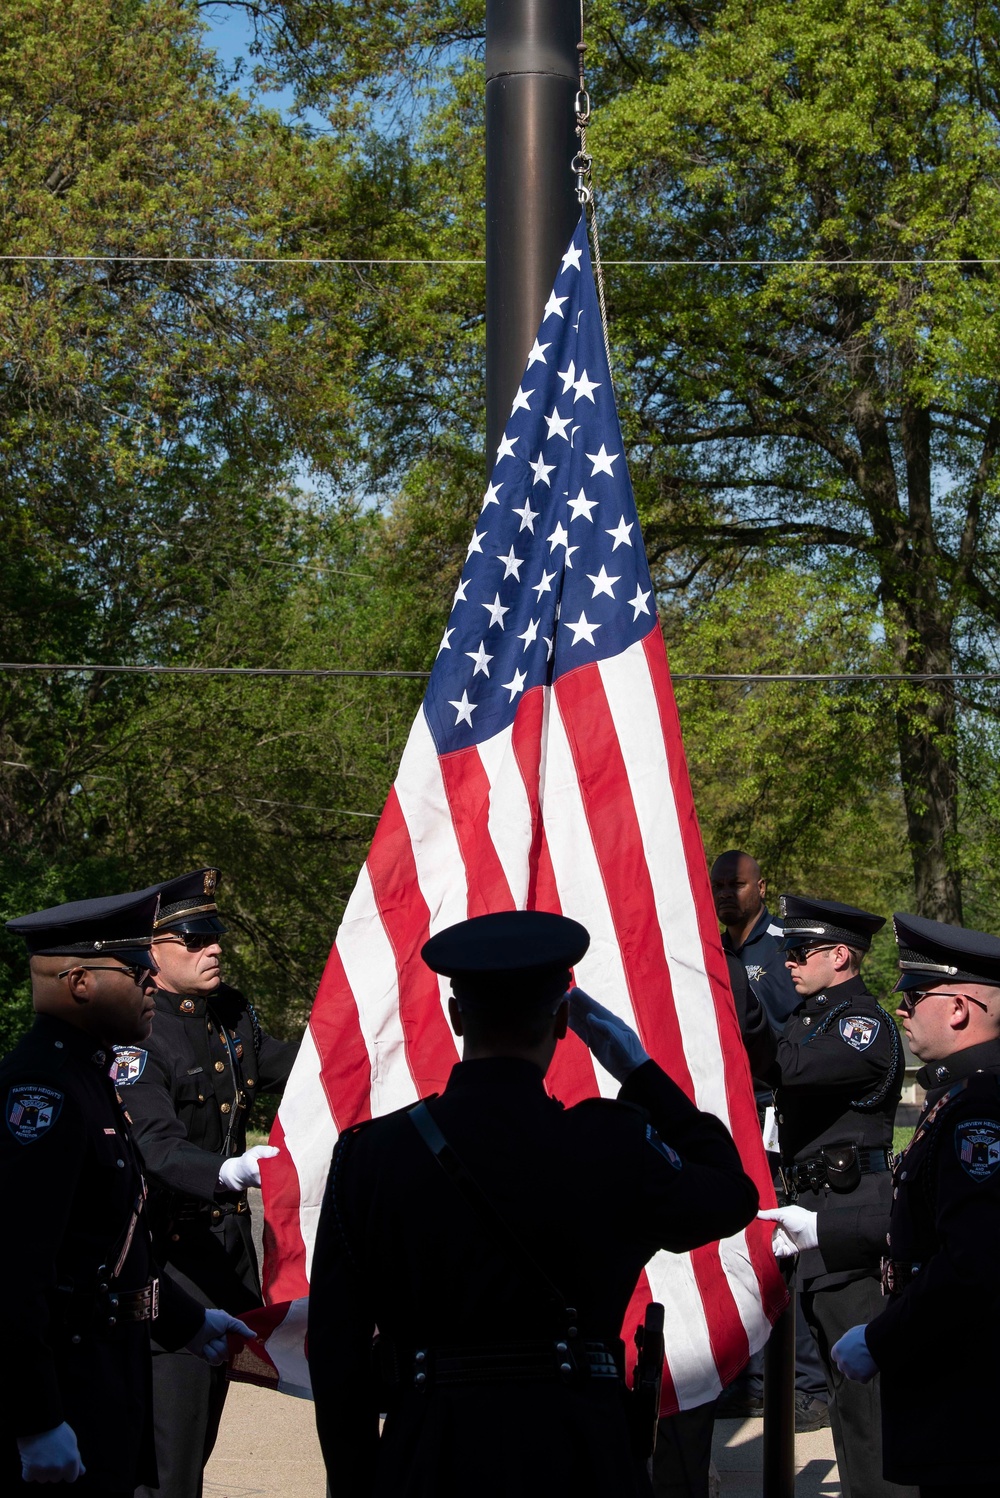 36th Annual Law Enforcement Memorial Service